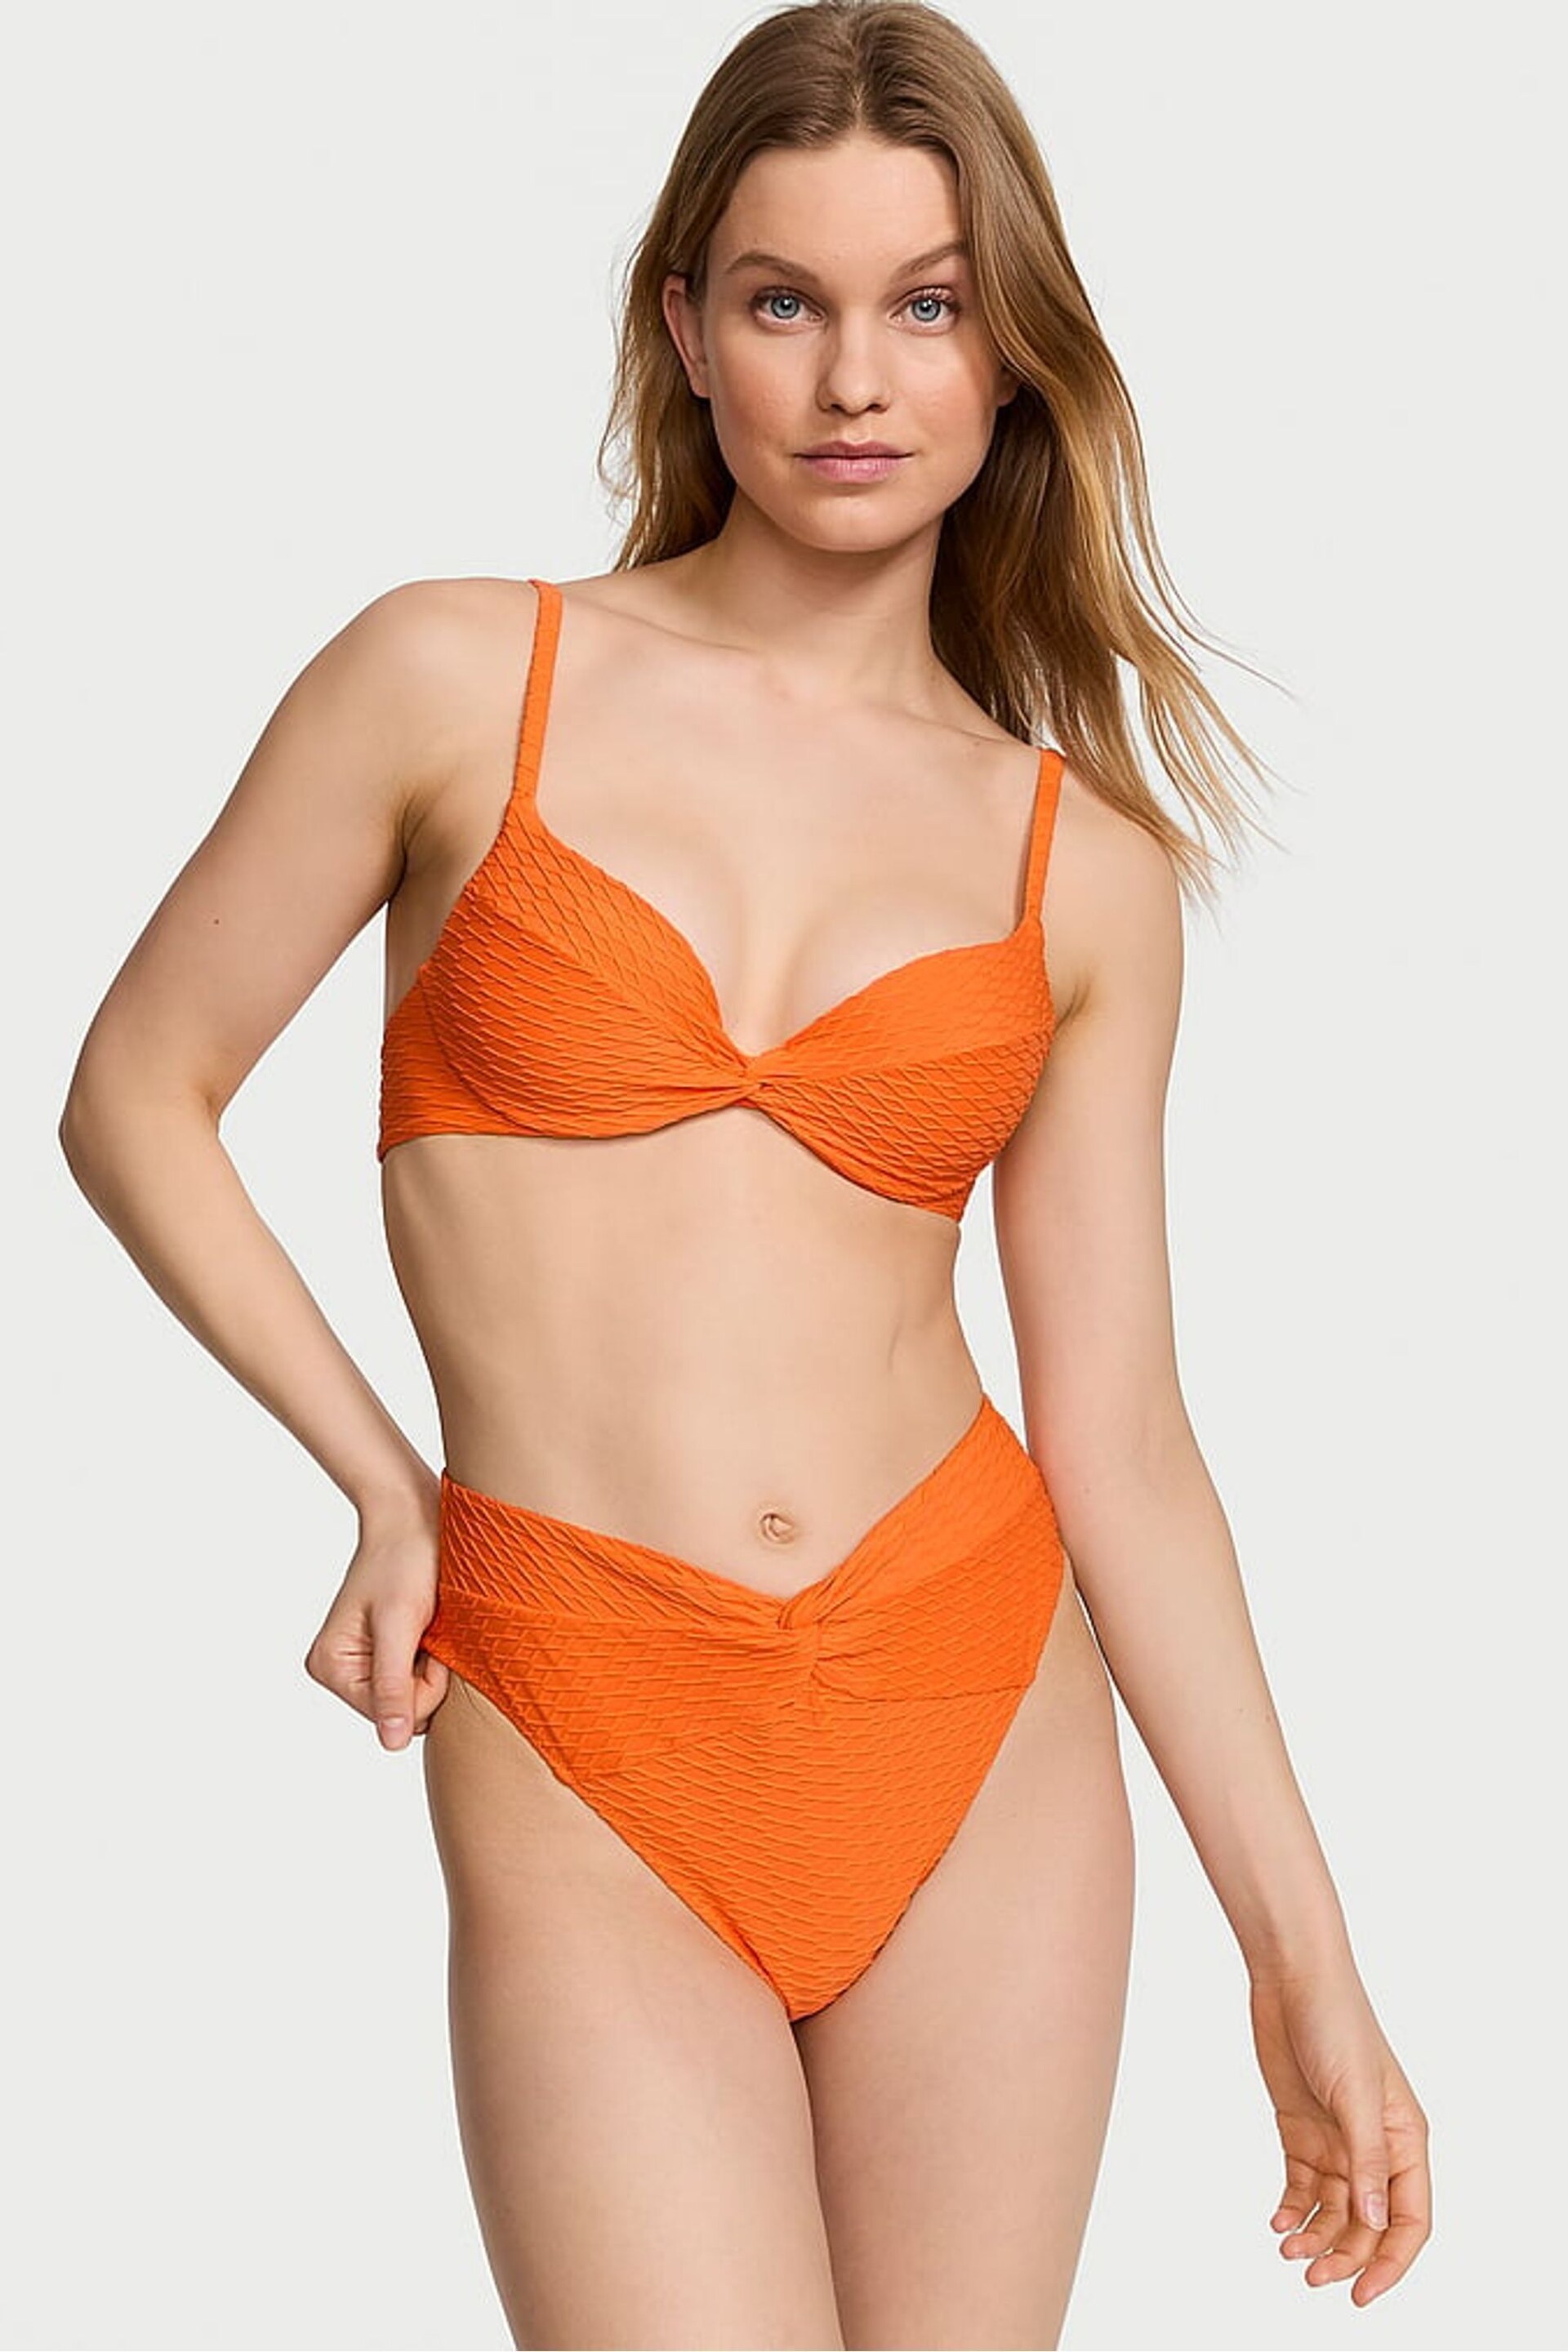 Victoria's Secret Sunset Orange Fishnet High Leg Swim Bikini Bottom - Image 1 of 3